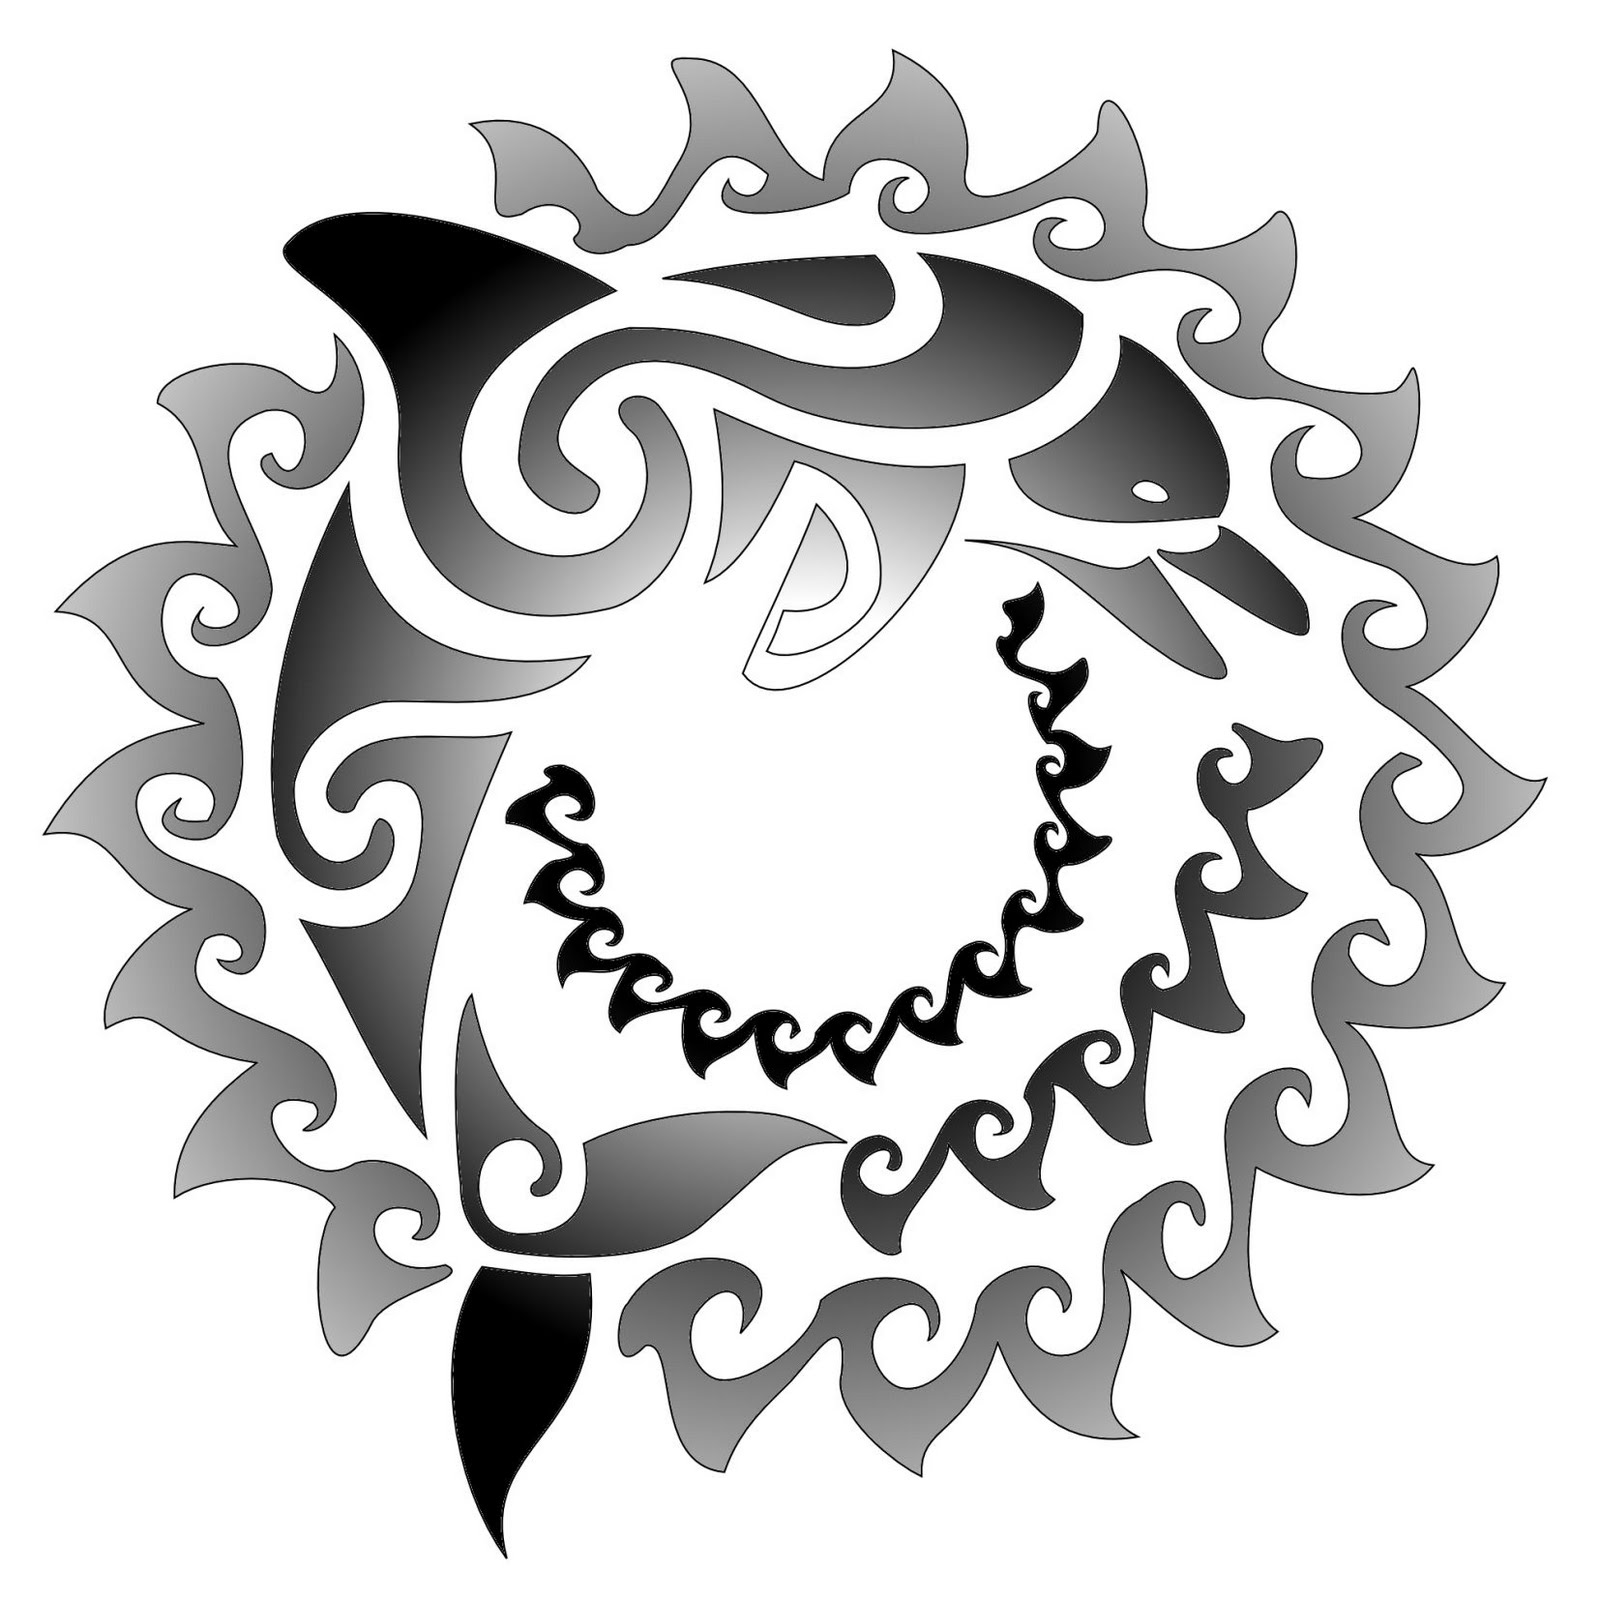 http://4.bp.blogspot.com/-VKwhosTNgtc/TisoeIY1g3I/AAAAAAAAInE/tAEJCfD5b9s/s1600/Maori+Sun+and+Dolphin+Tattoo+Pattern.jpg